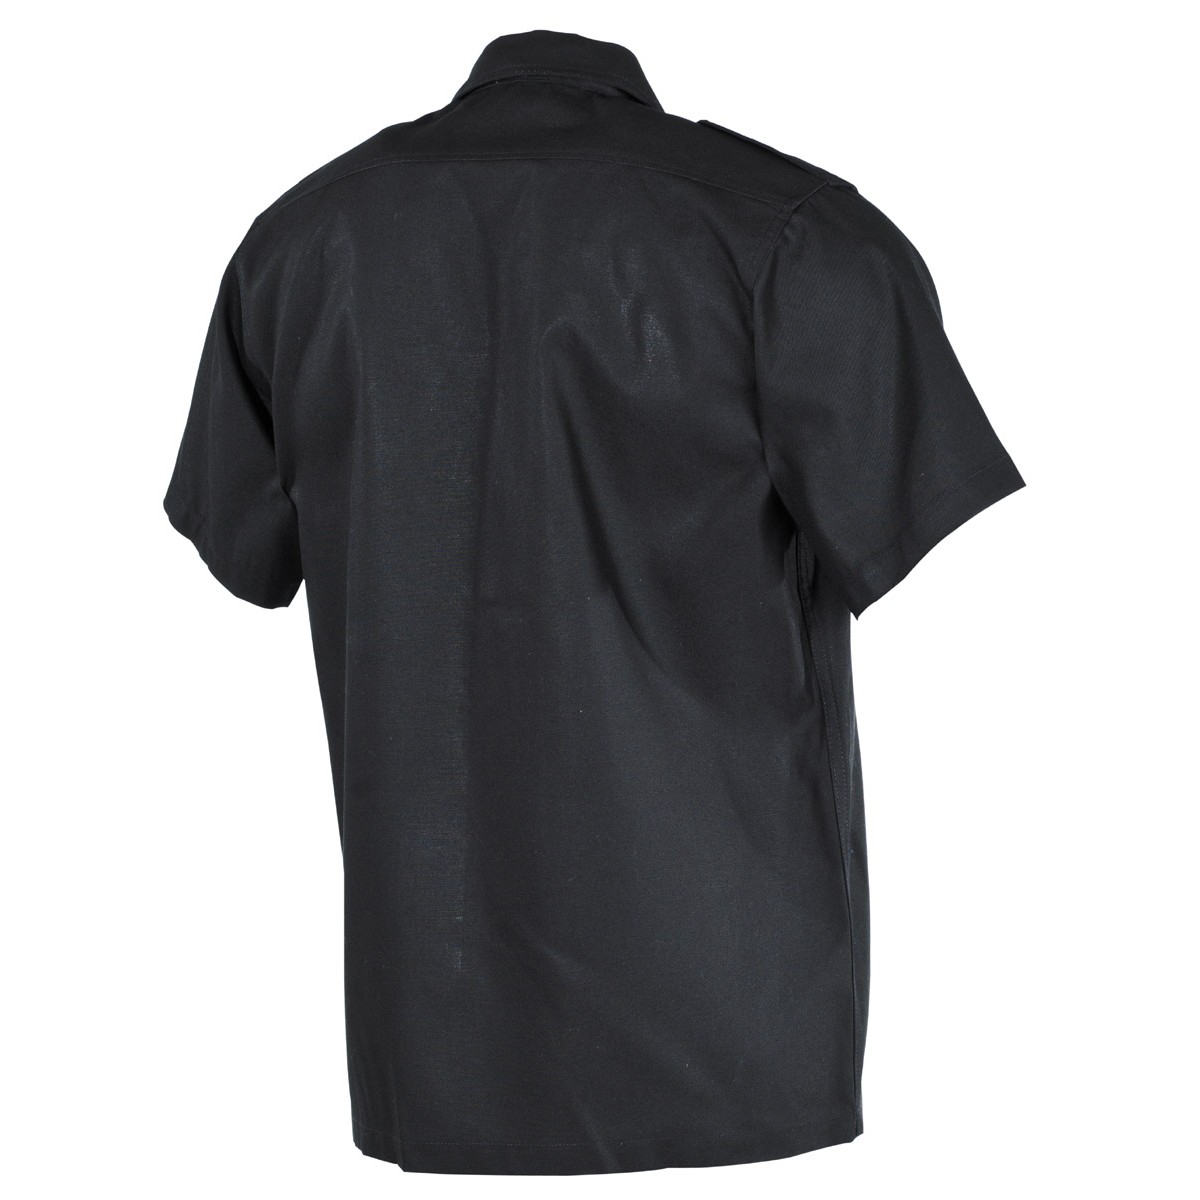 Shirt US short sleeve BLACK MFH int. comp. 02712A L-11